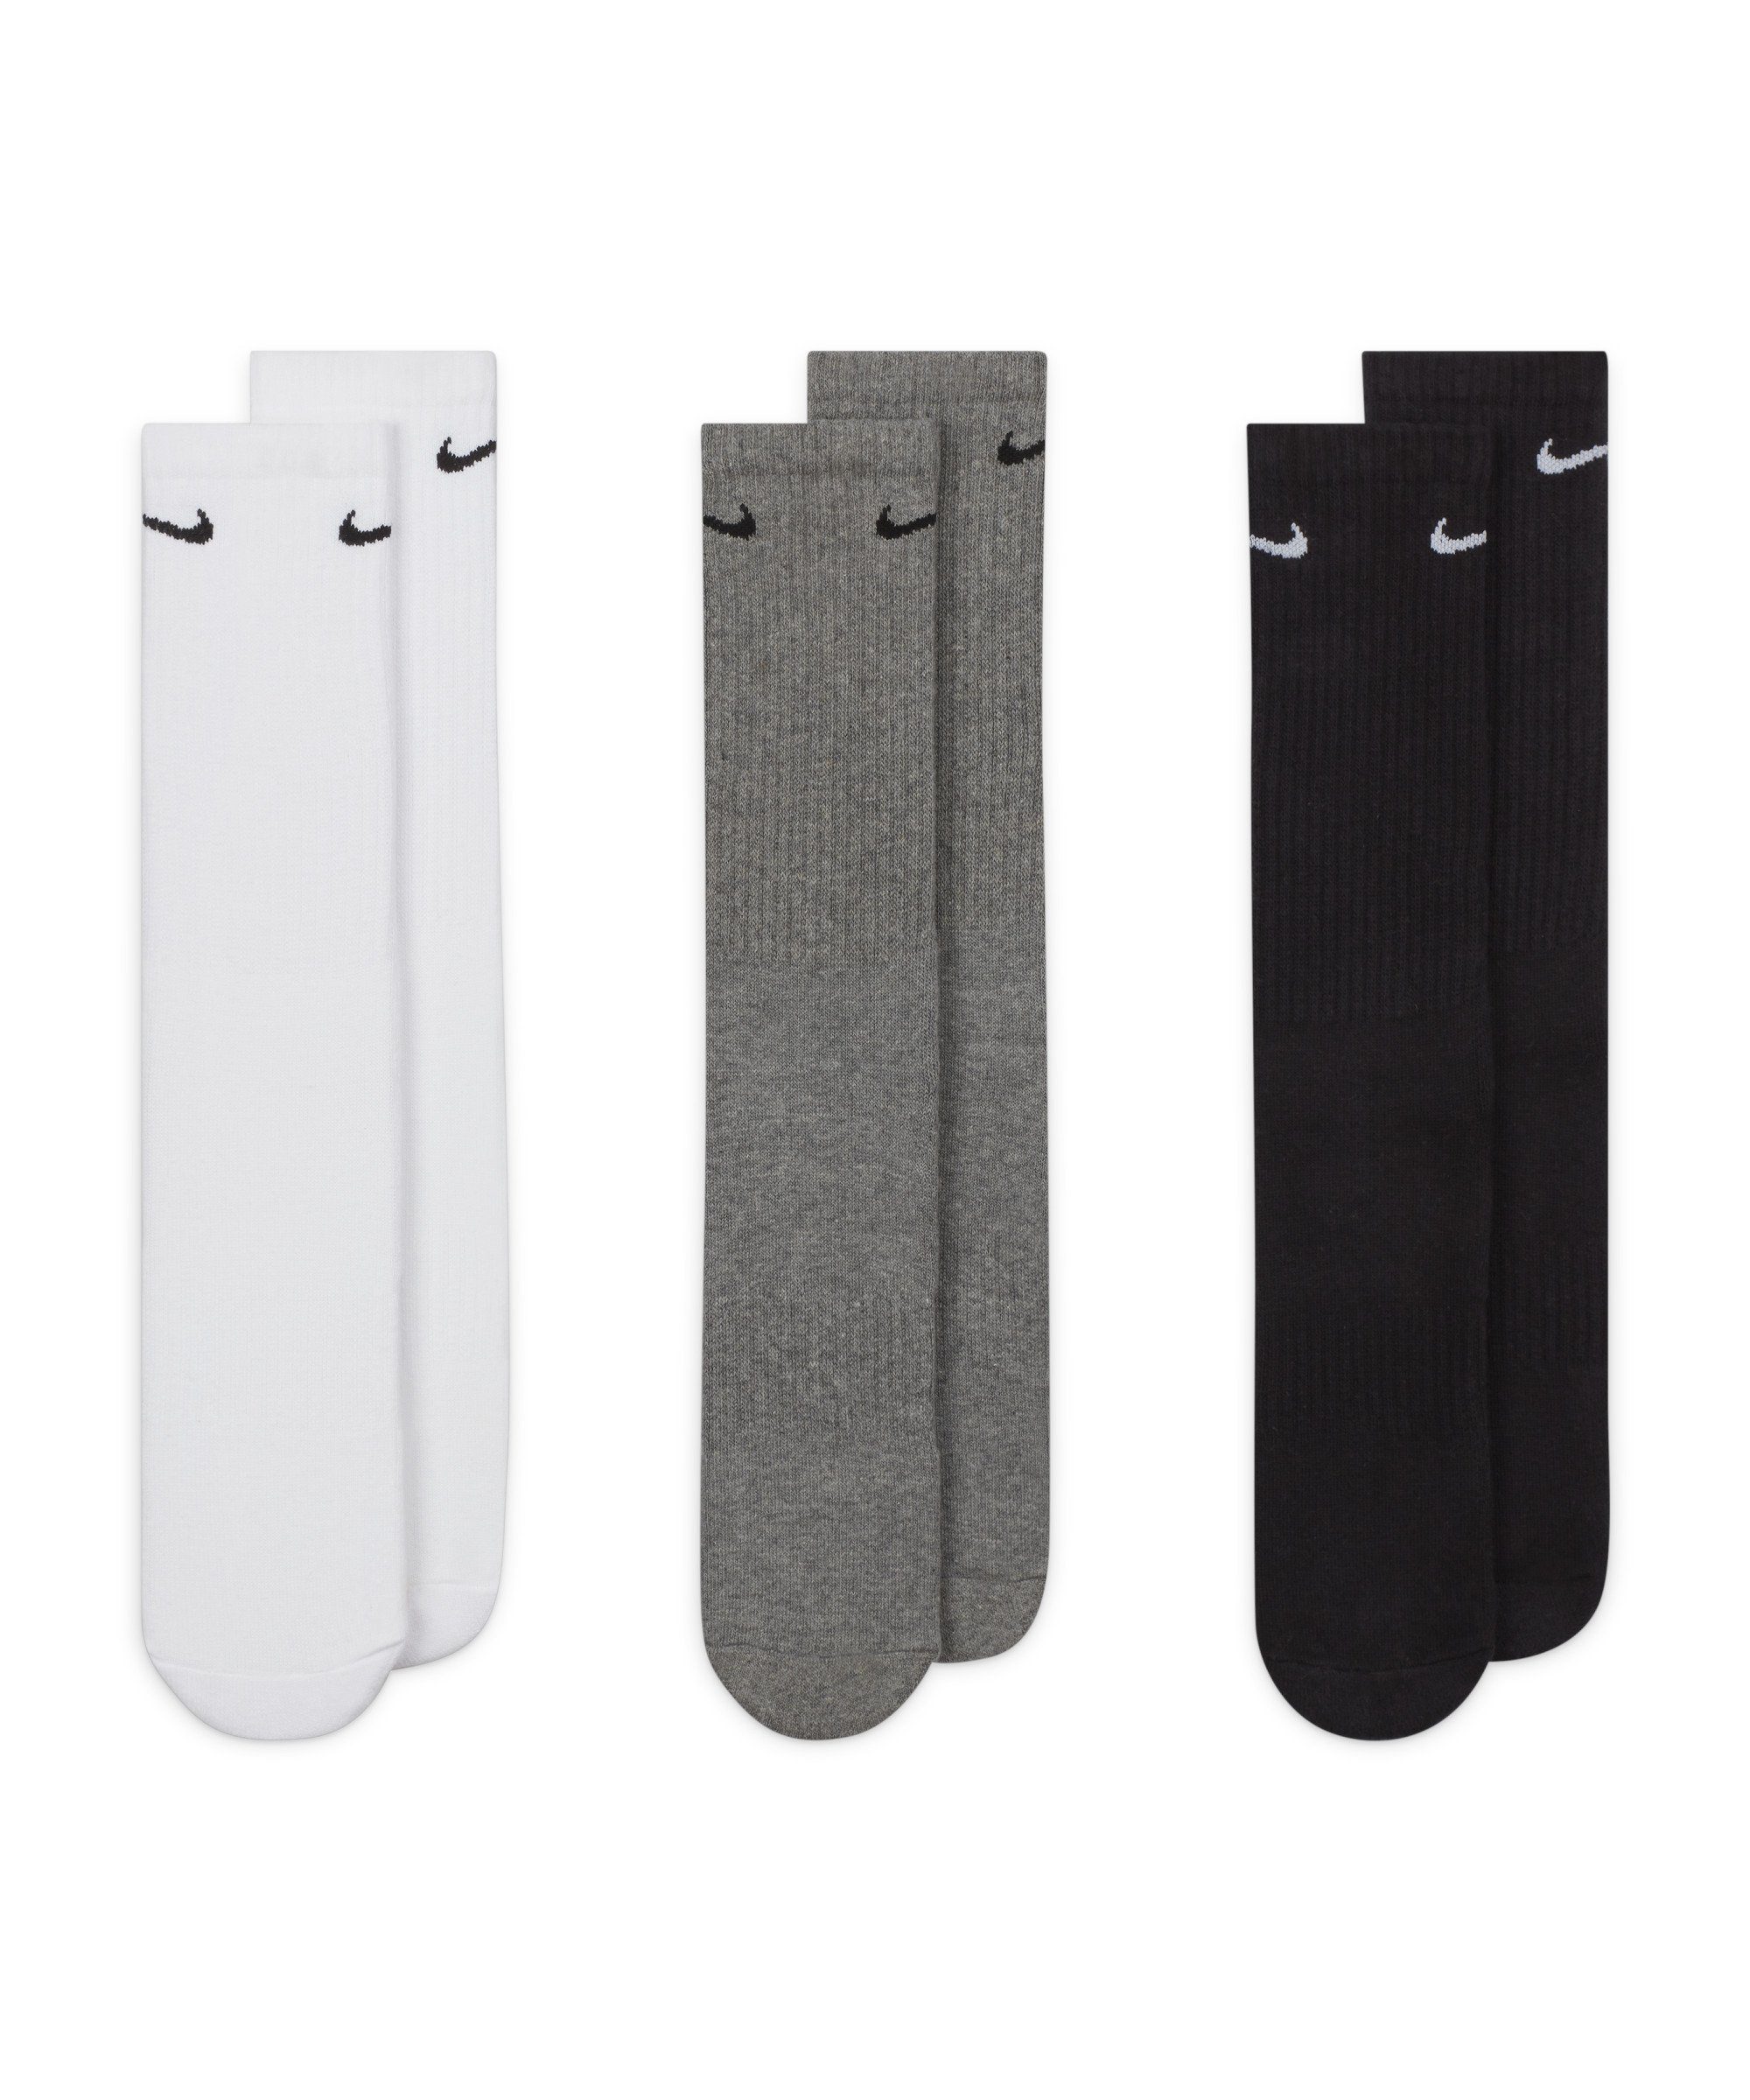 Cushion weiss Sportswear Freizeitsocken Pack 3er Socken Everyday default Nike